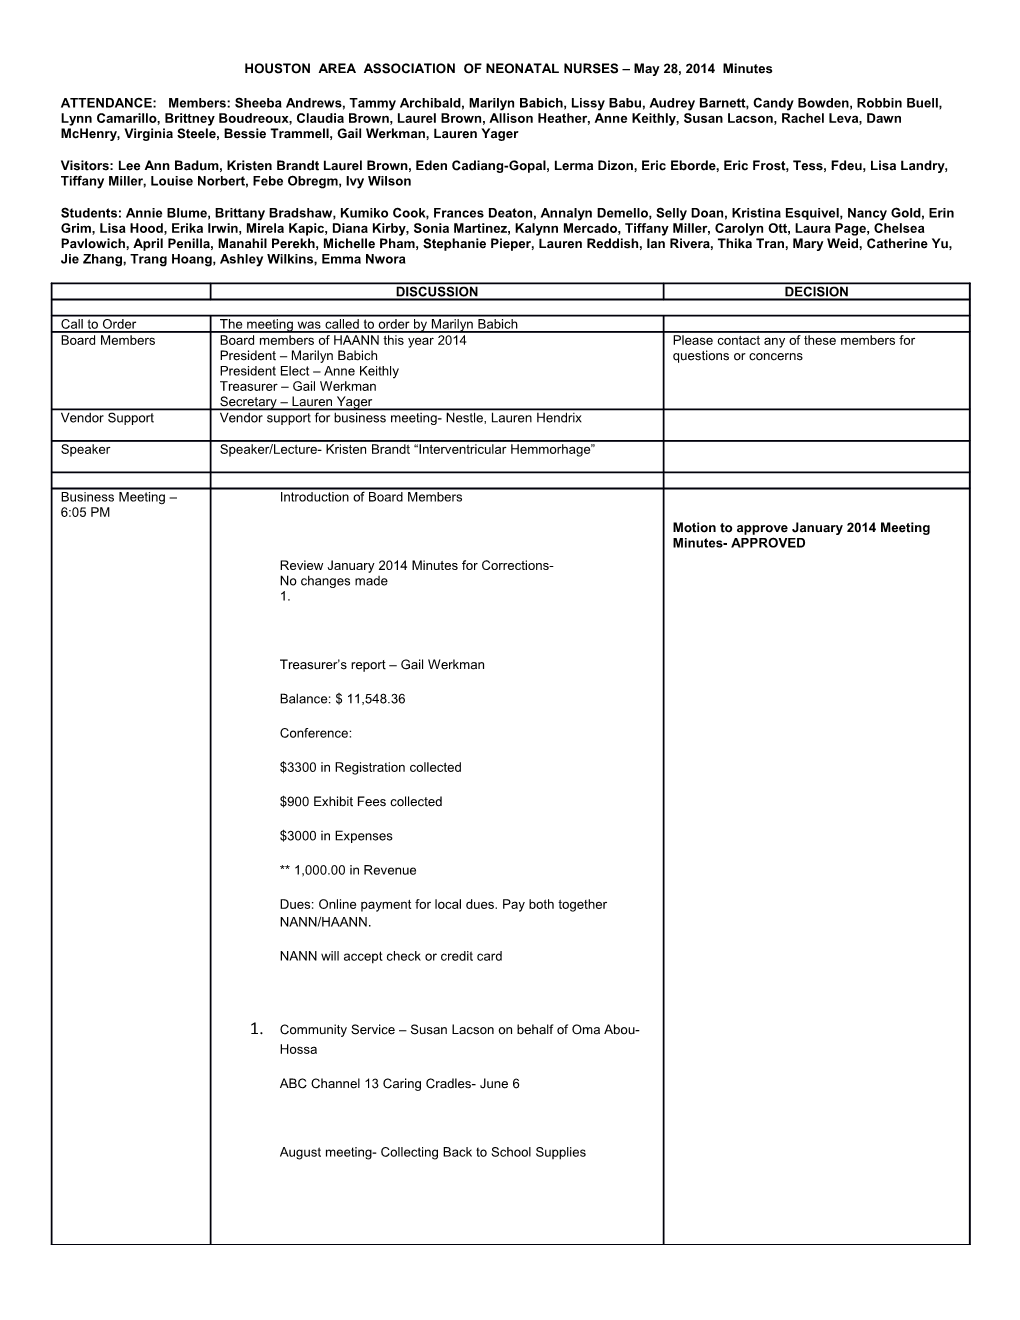 HOUSTON AREA ASSOCIATION of NEONATAL NURSES May 28, 2014 Minutes